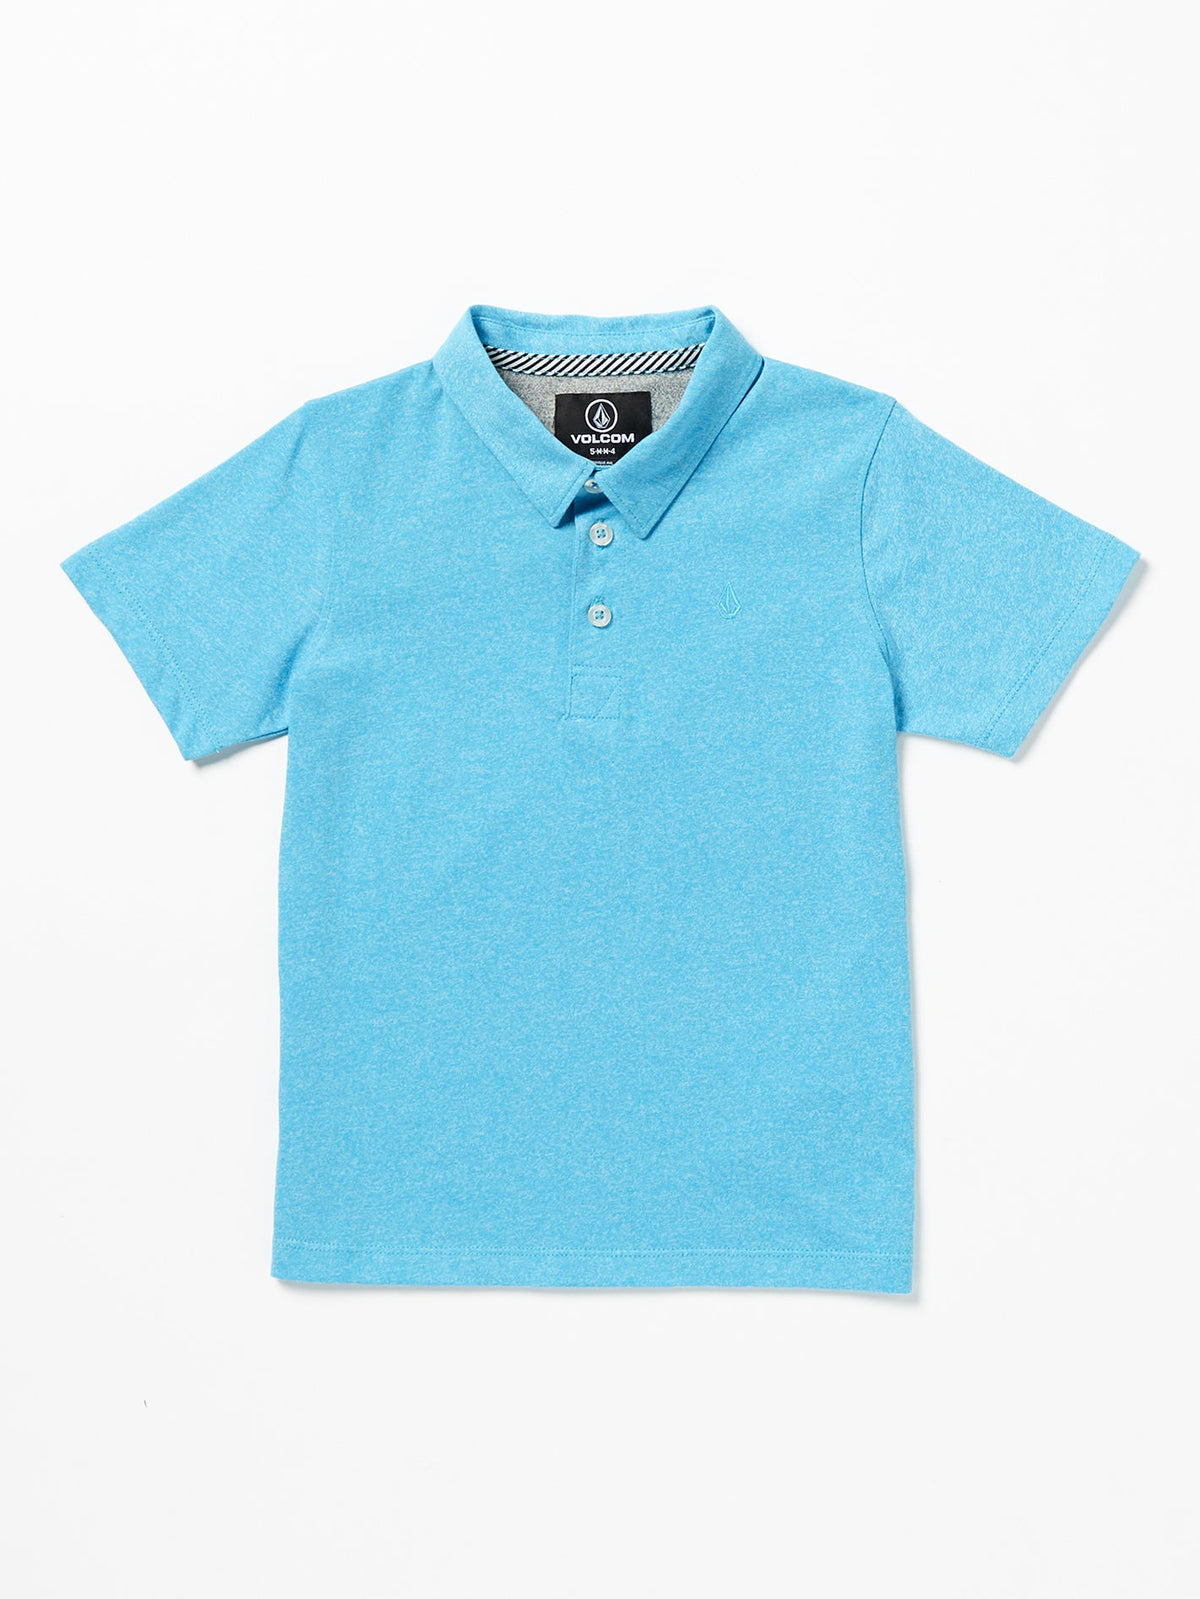 Volcom Wowzer Polo Boys Short Sleeve Shirt (Age 2-7) Turkish Blue